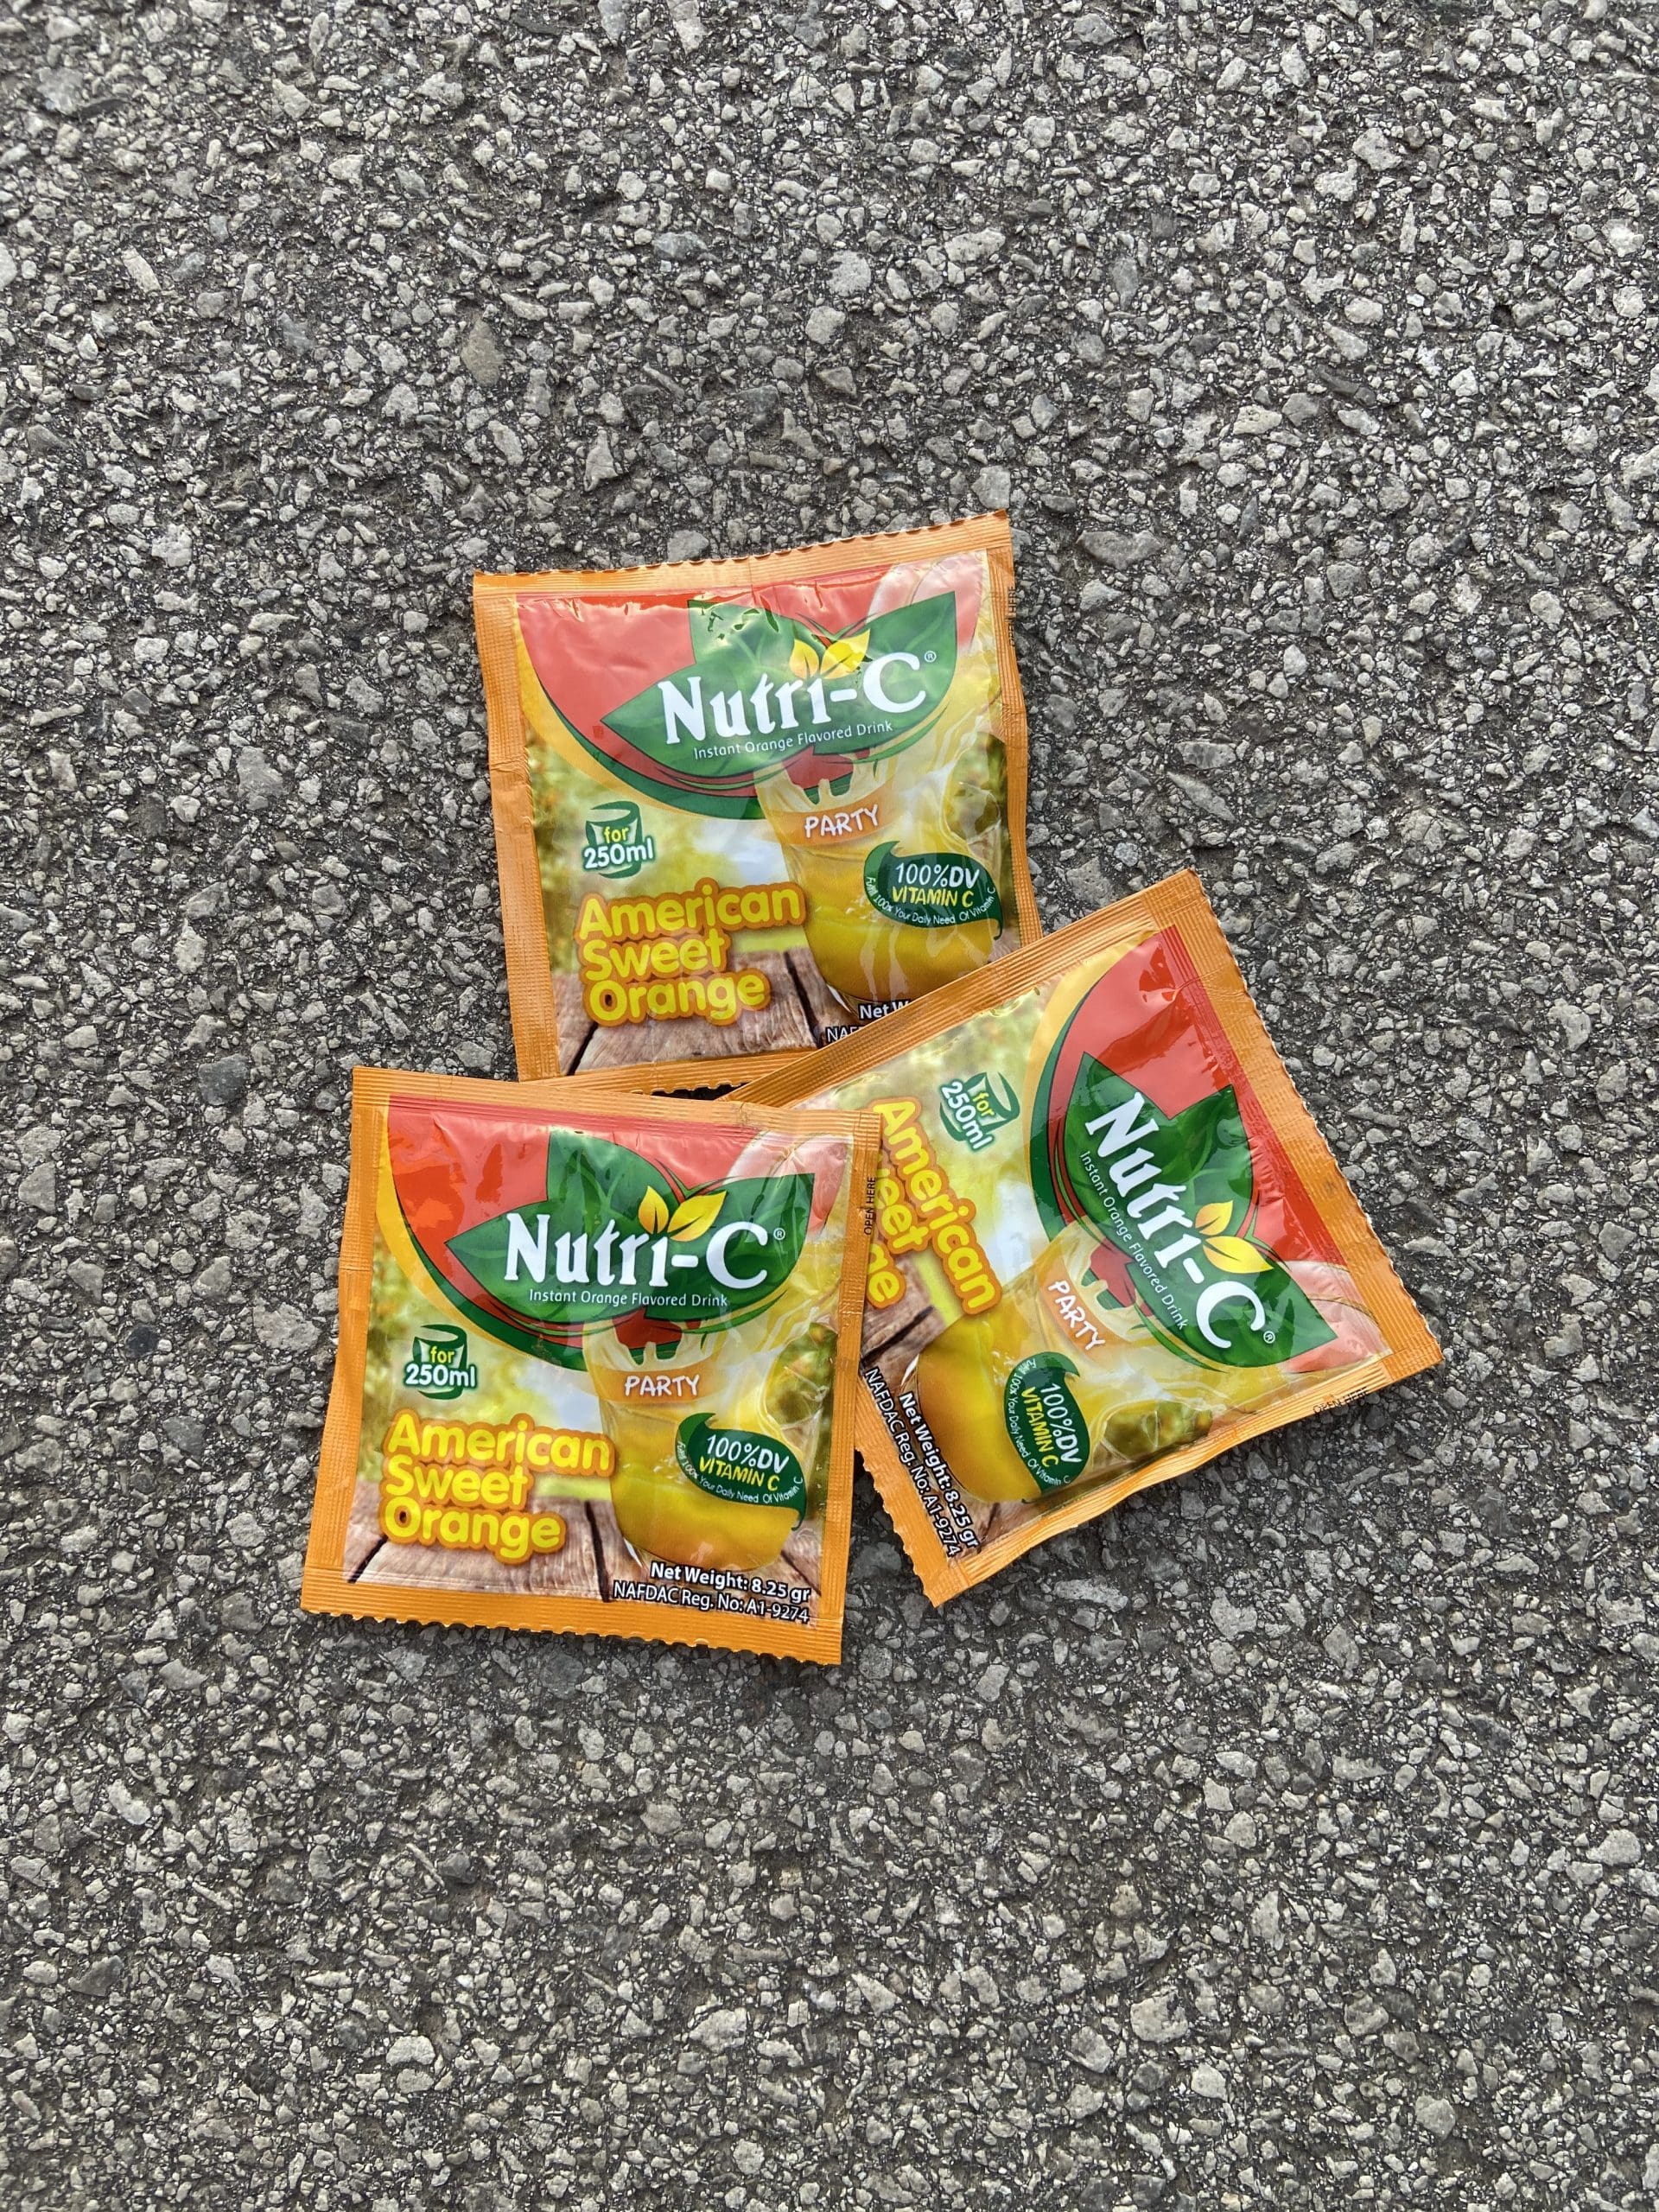 Nutri-C (Powdered Orange juice)